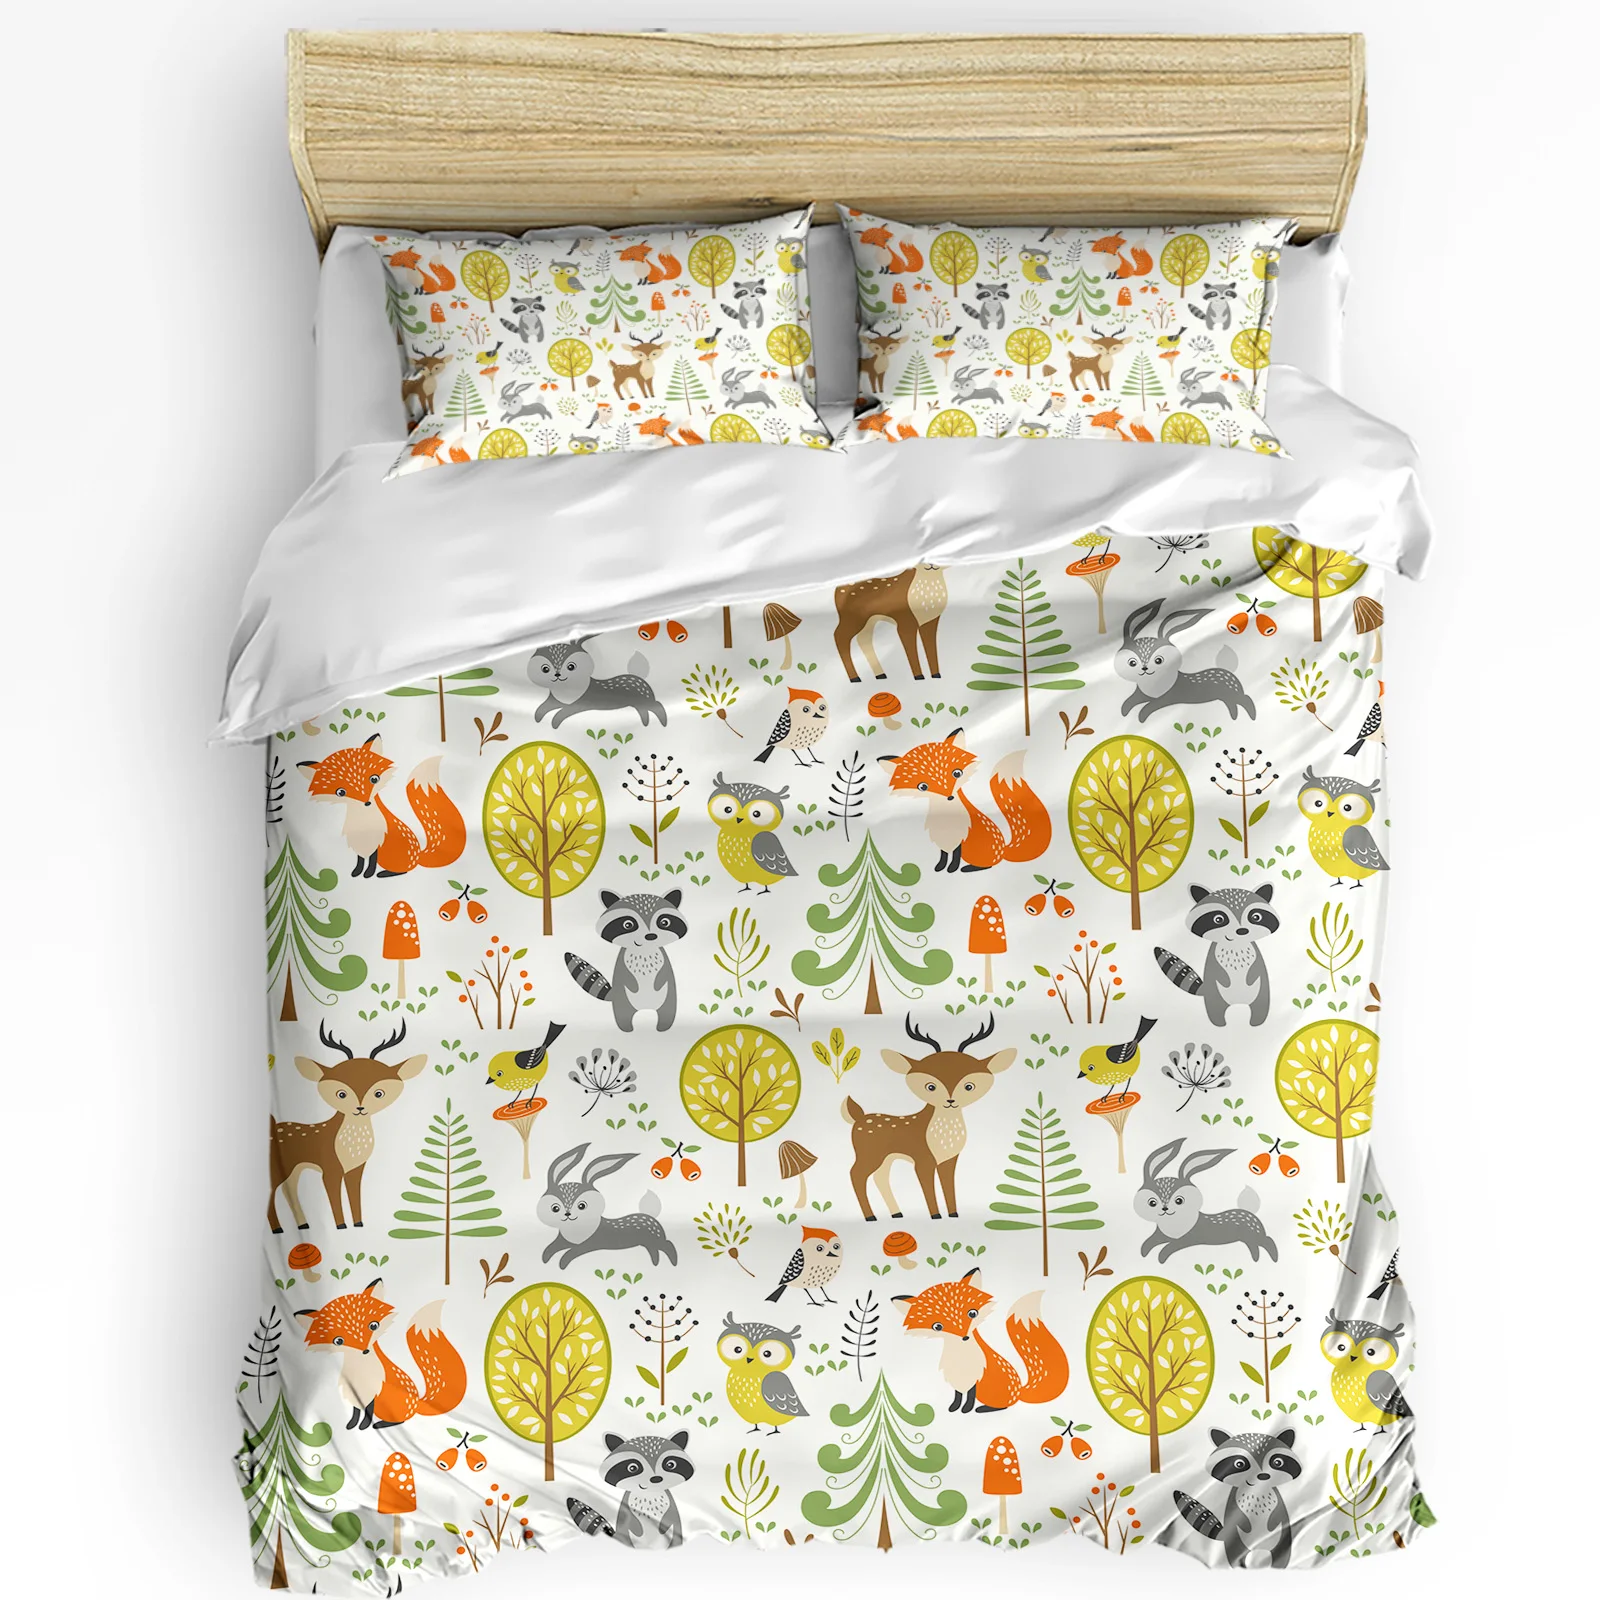 

3pcs Bedding Set Cartoon Animals Kawaii Fox Owl Home Textile Duvet Cover Pillow Case Boy Kid Teen Girl Bedding Covers Set